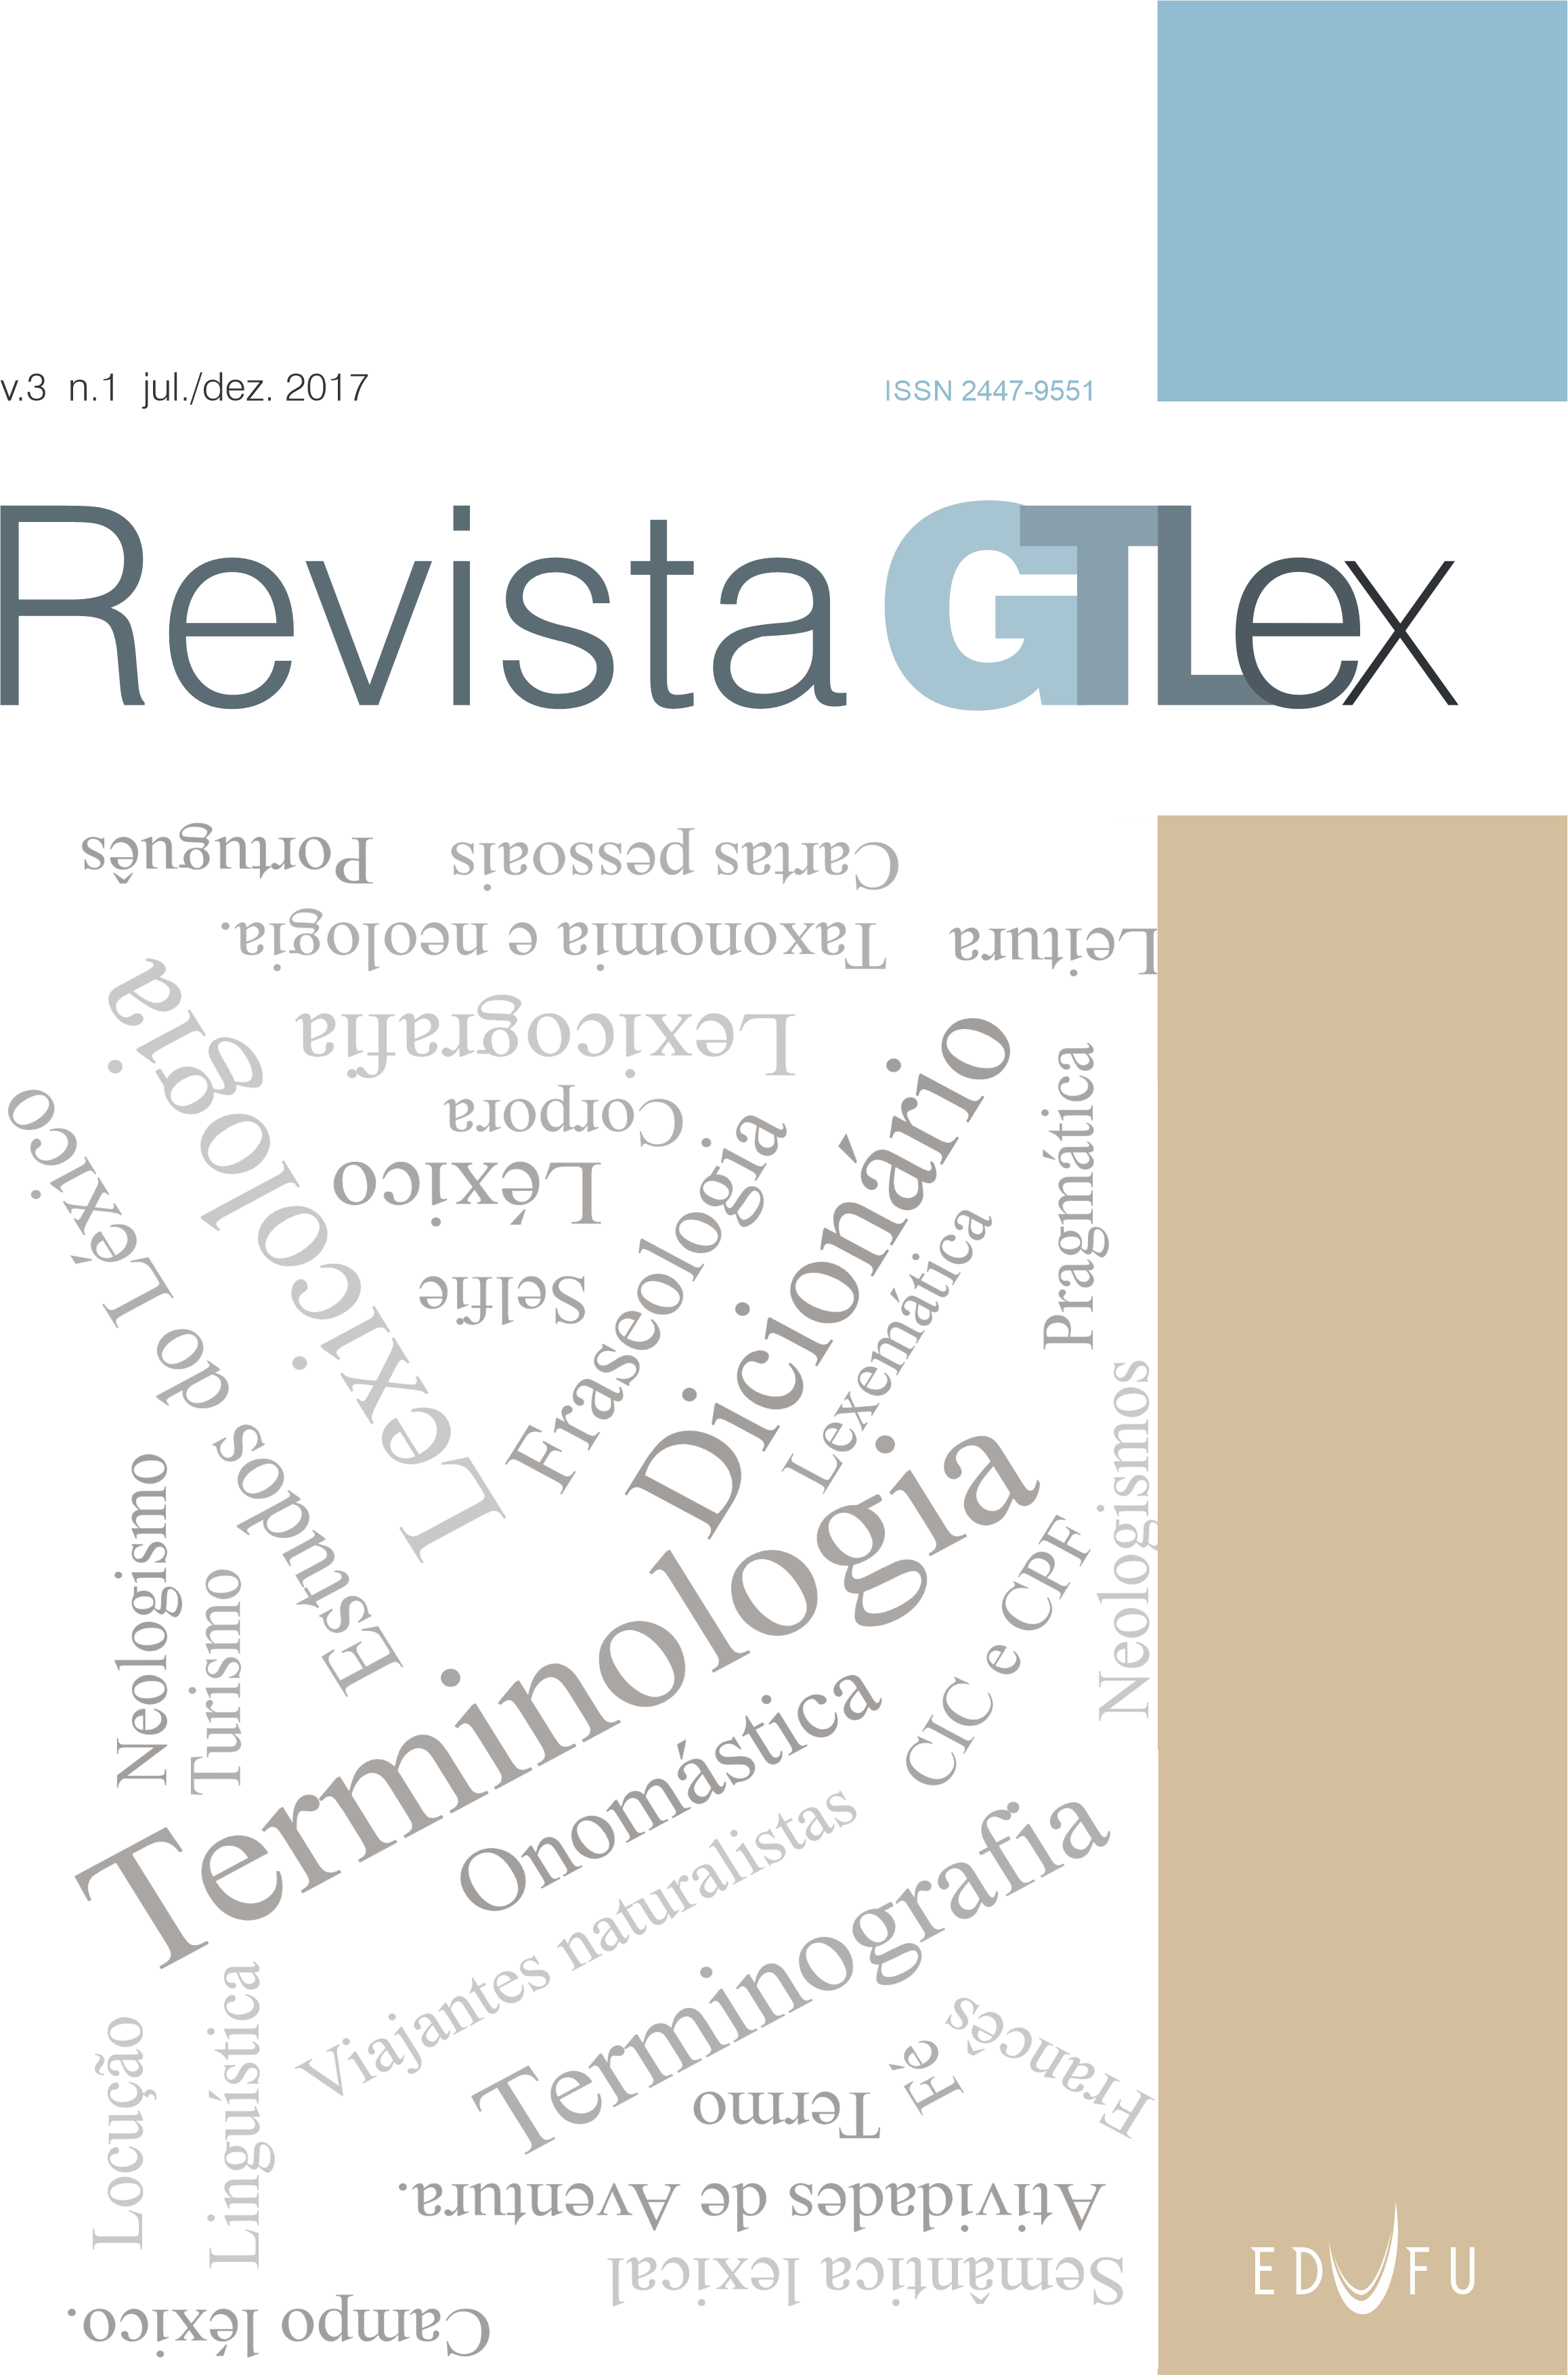 Revista GTLex - Onomástica